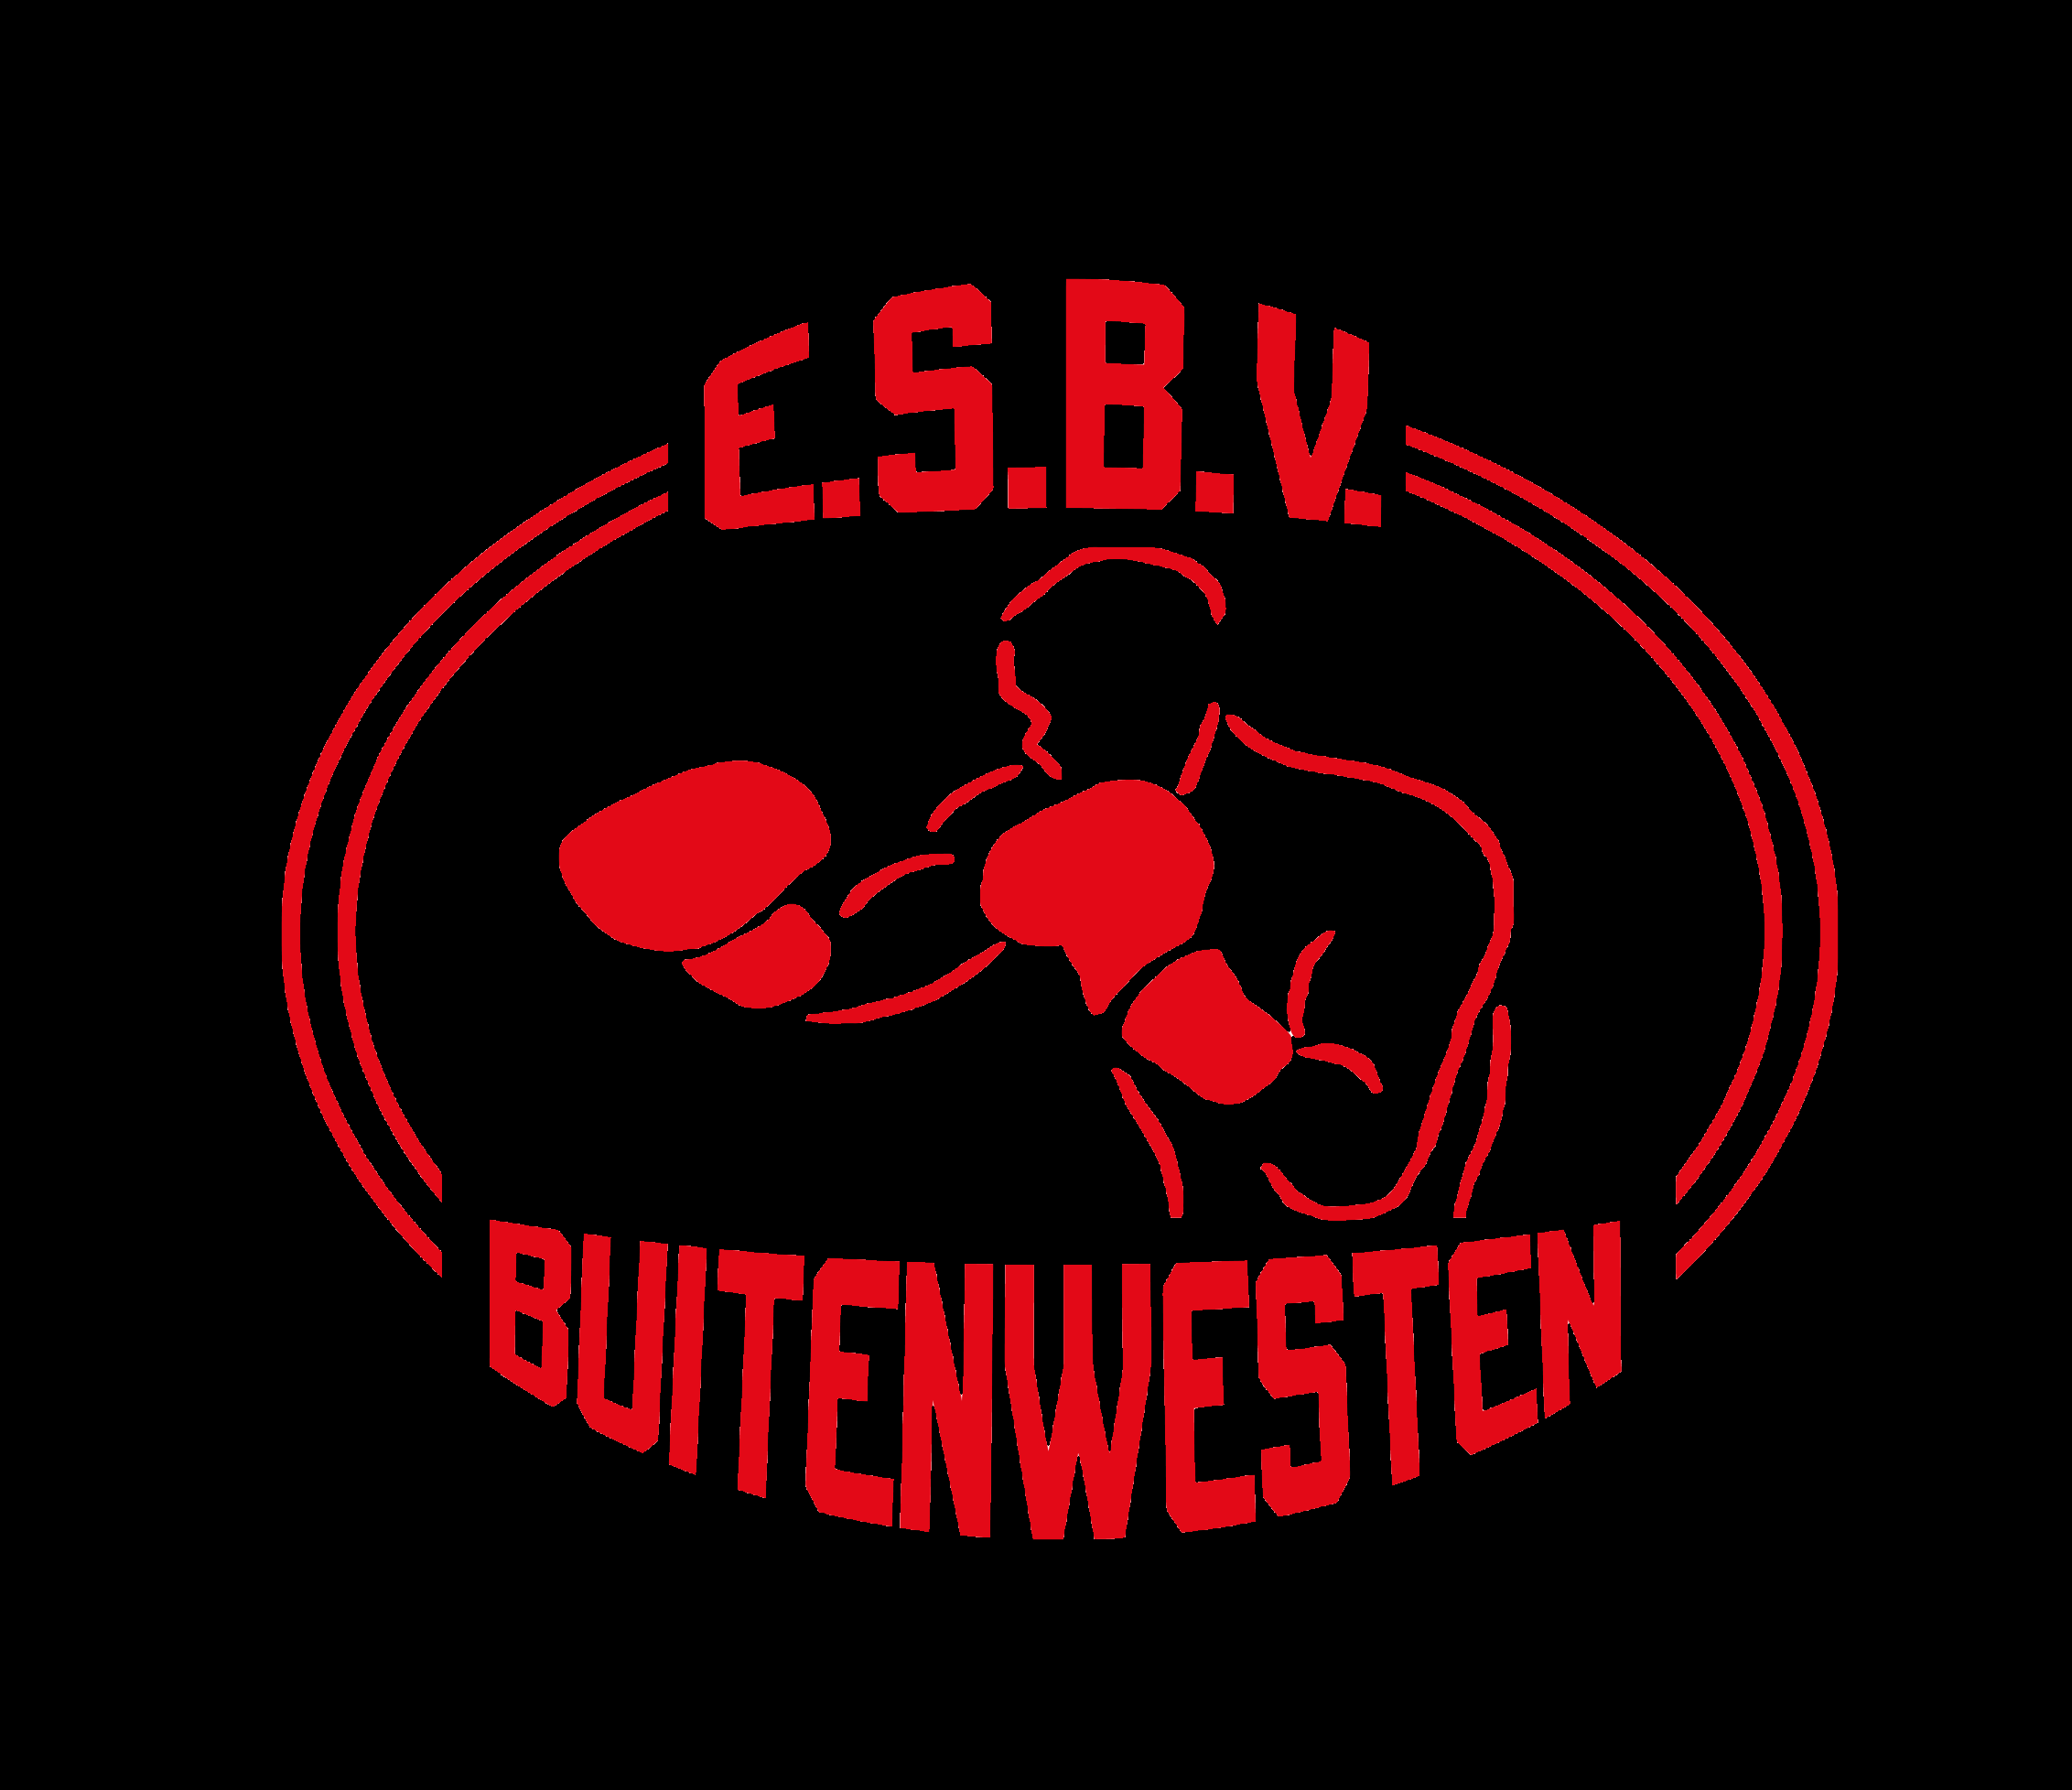 E.S.B.V. Buitenwesten